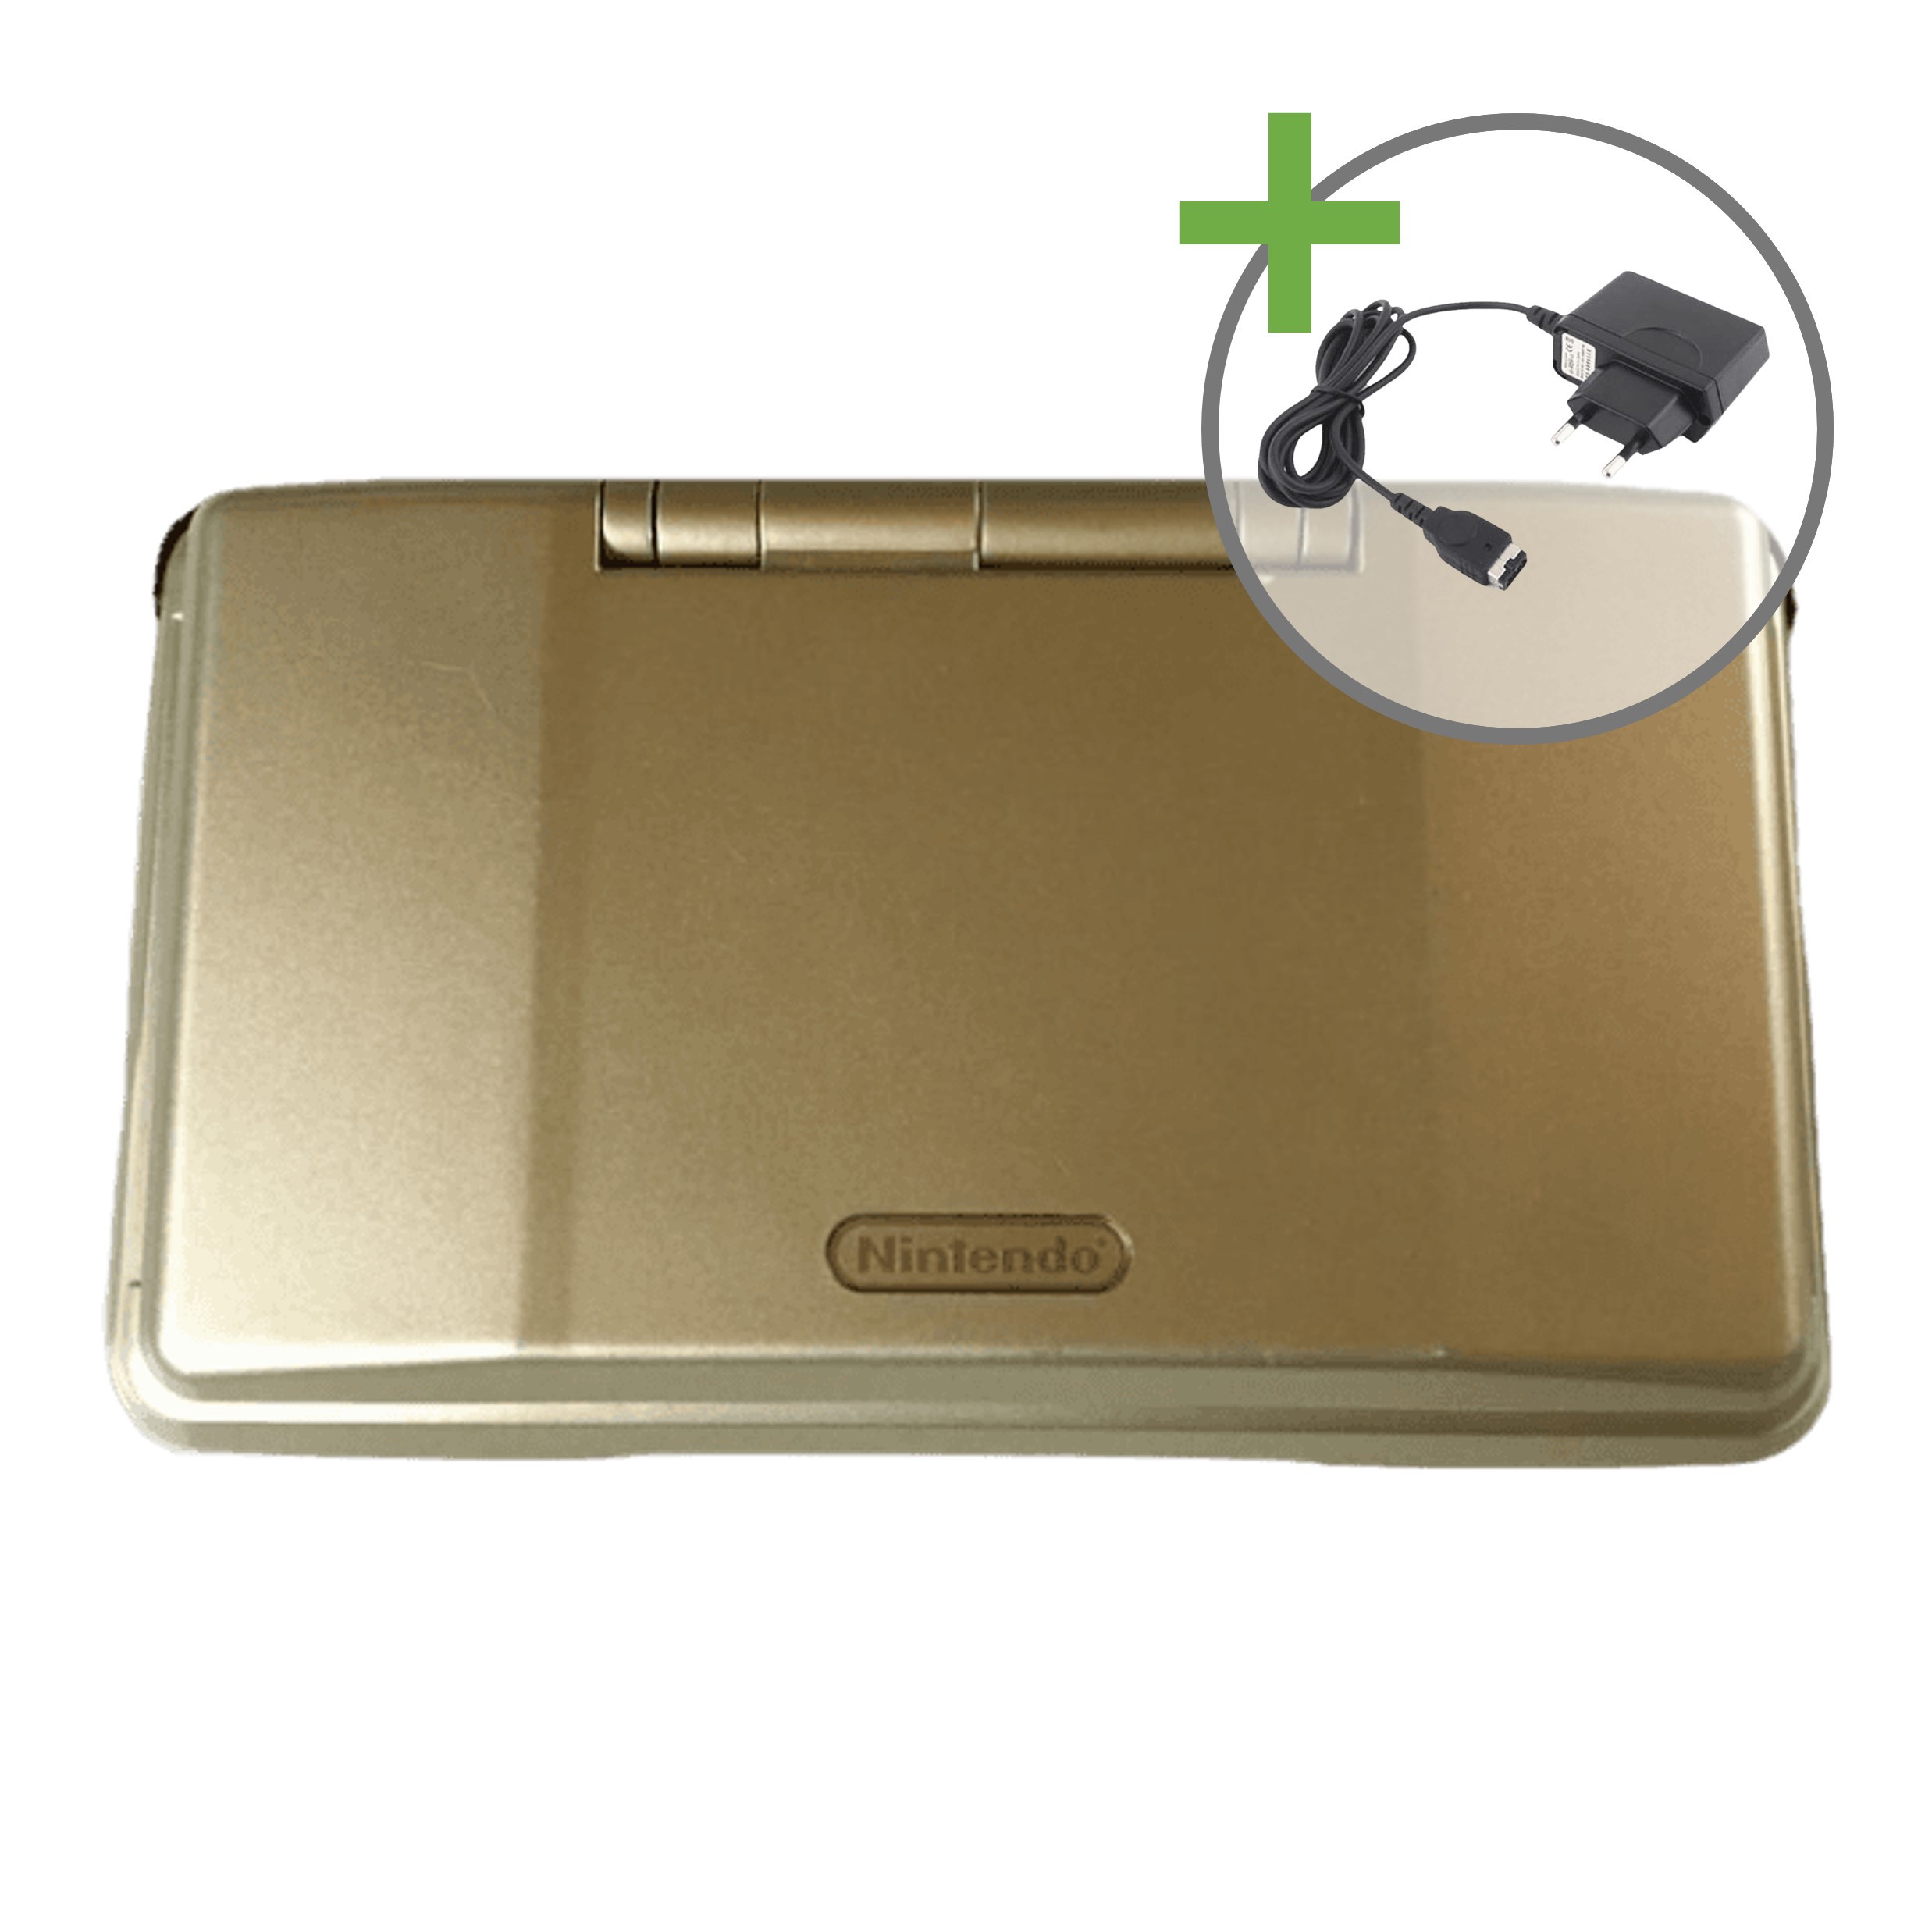 Nintendo DS Original - Toys 'R Us Gold Edition - Nintendo DS Hardware - 2